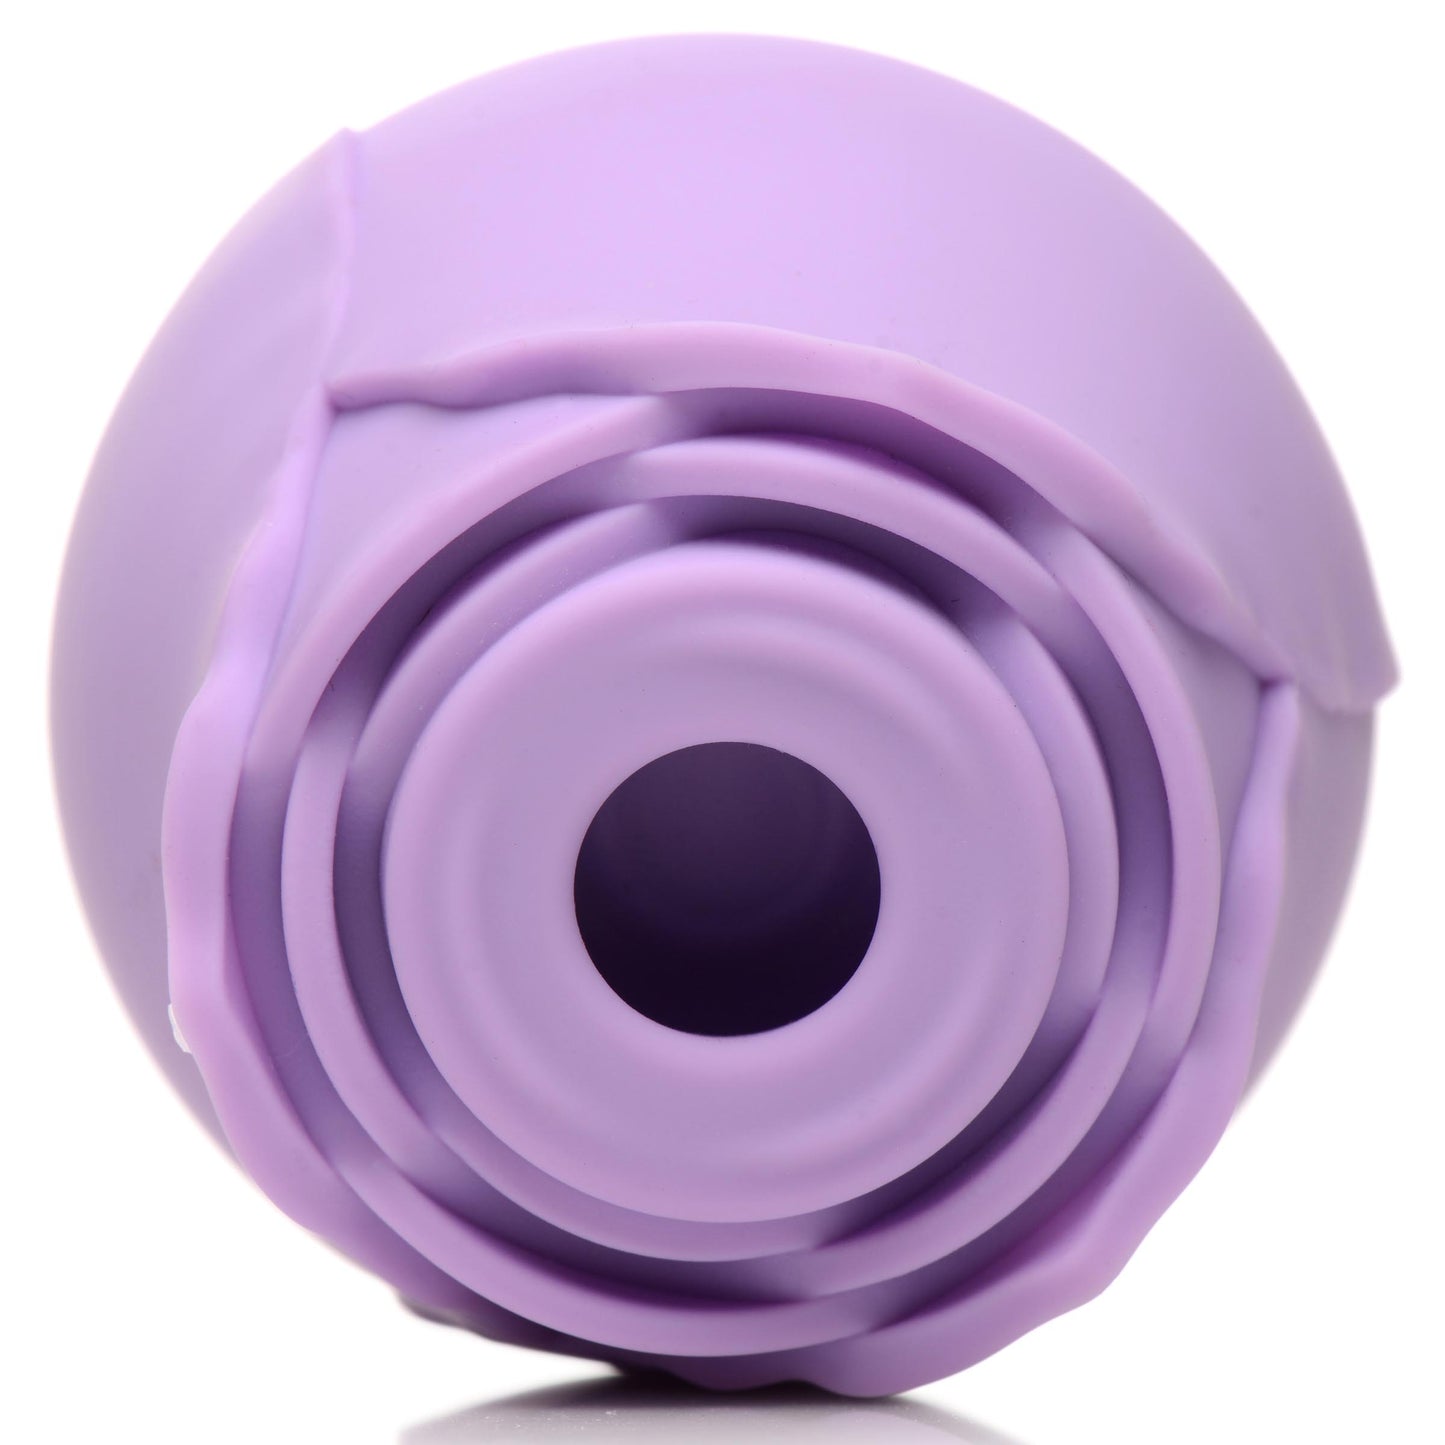 Bloomgasm Wild Rose 10X Suction Clit Stimulator - Purple - UABDSM